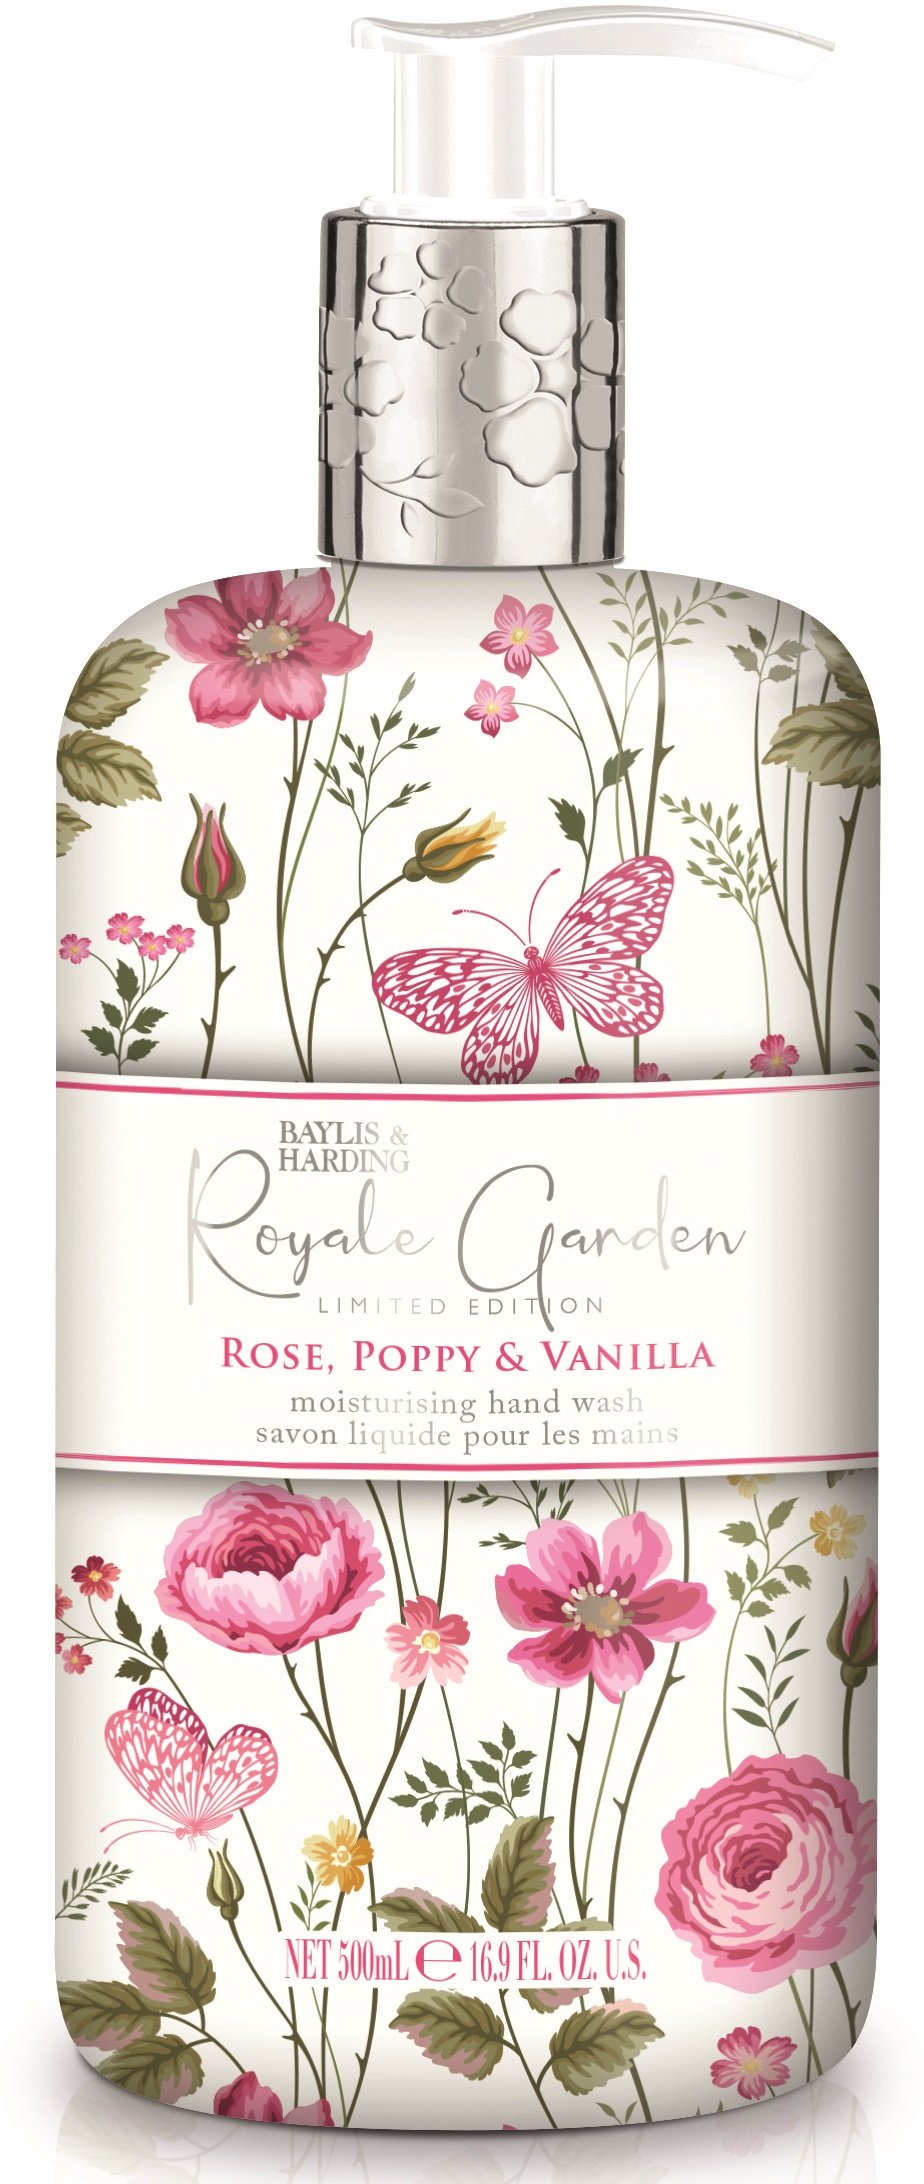 Baylis & Harding Royale Garden Rose Poppy & Vanilla Hand Wash 500 ml